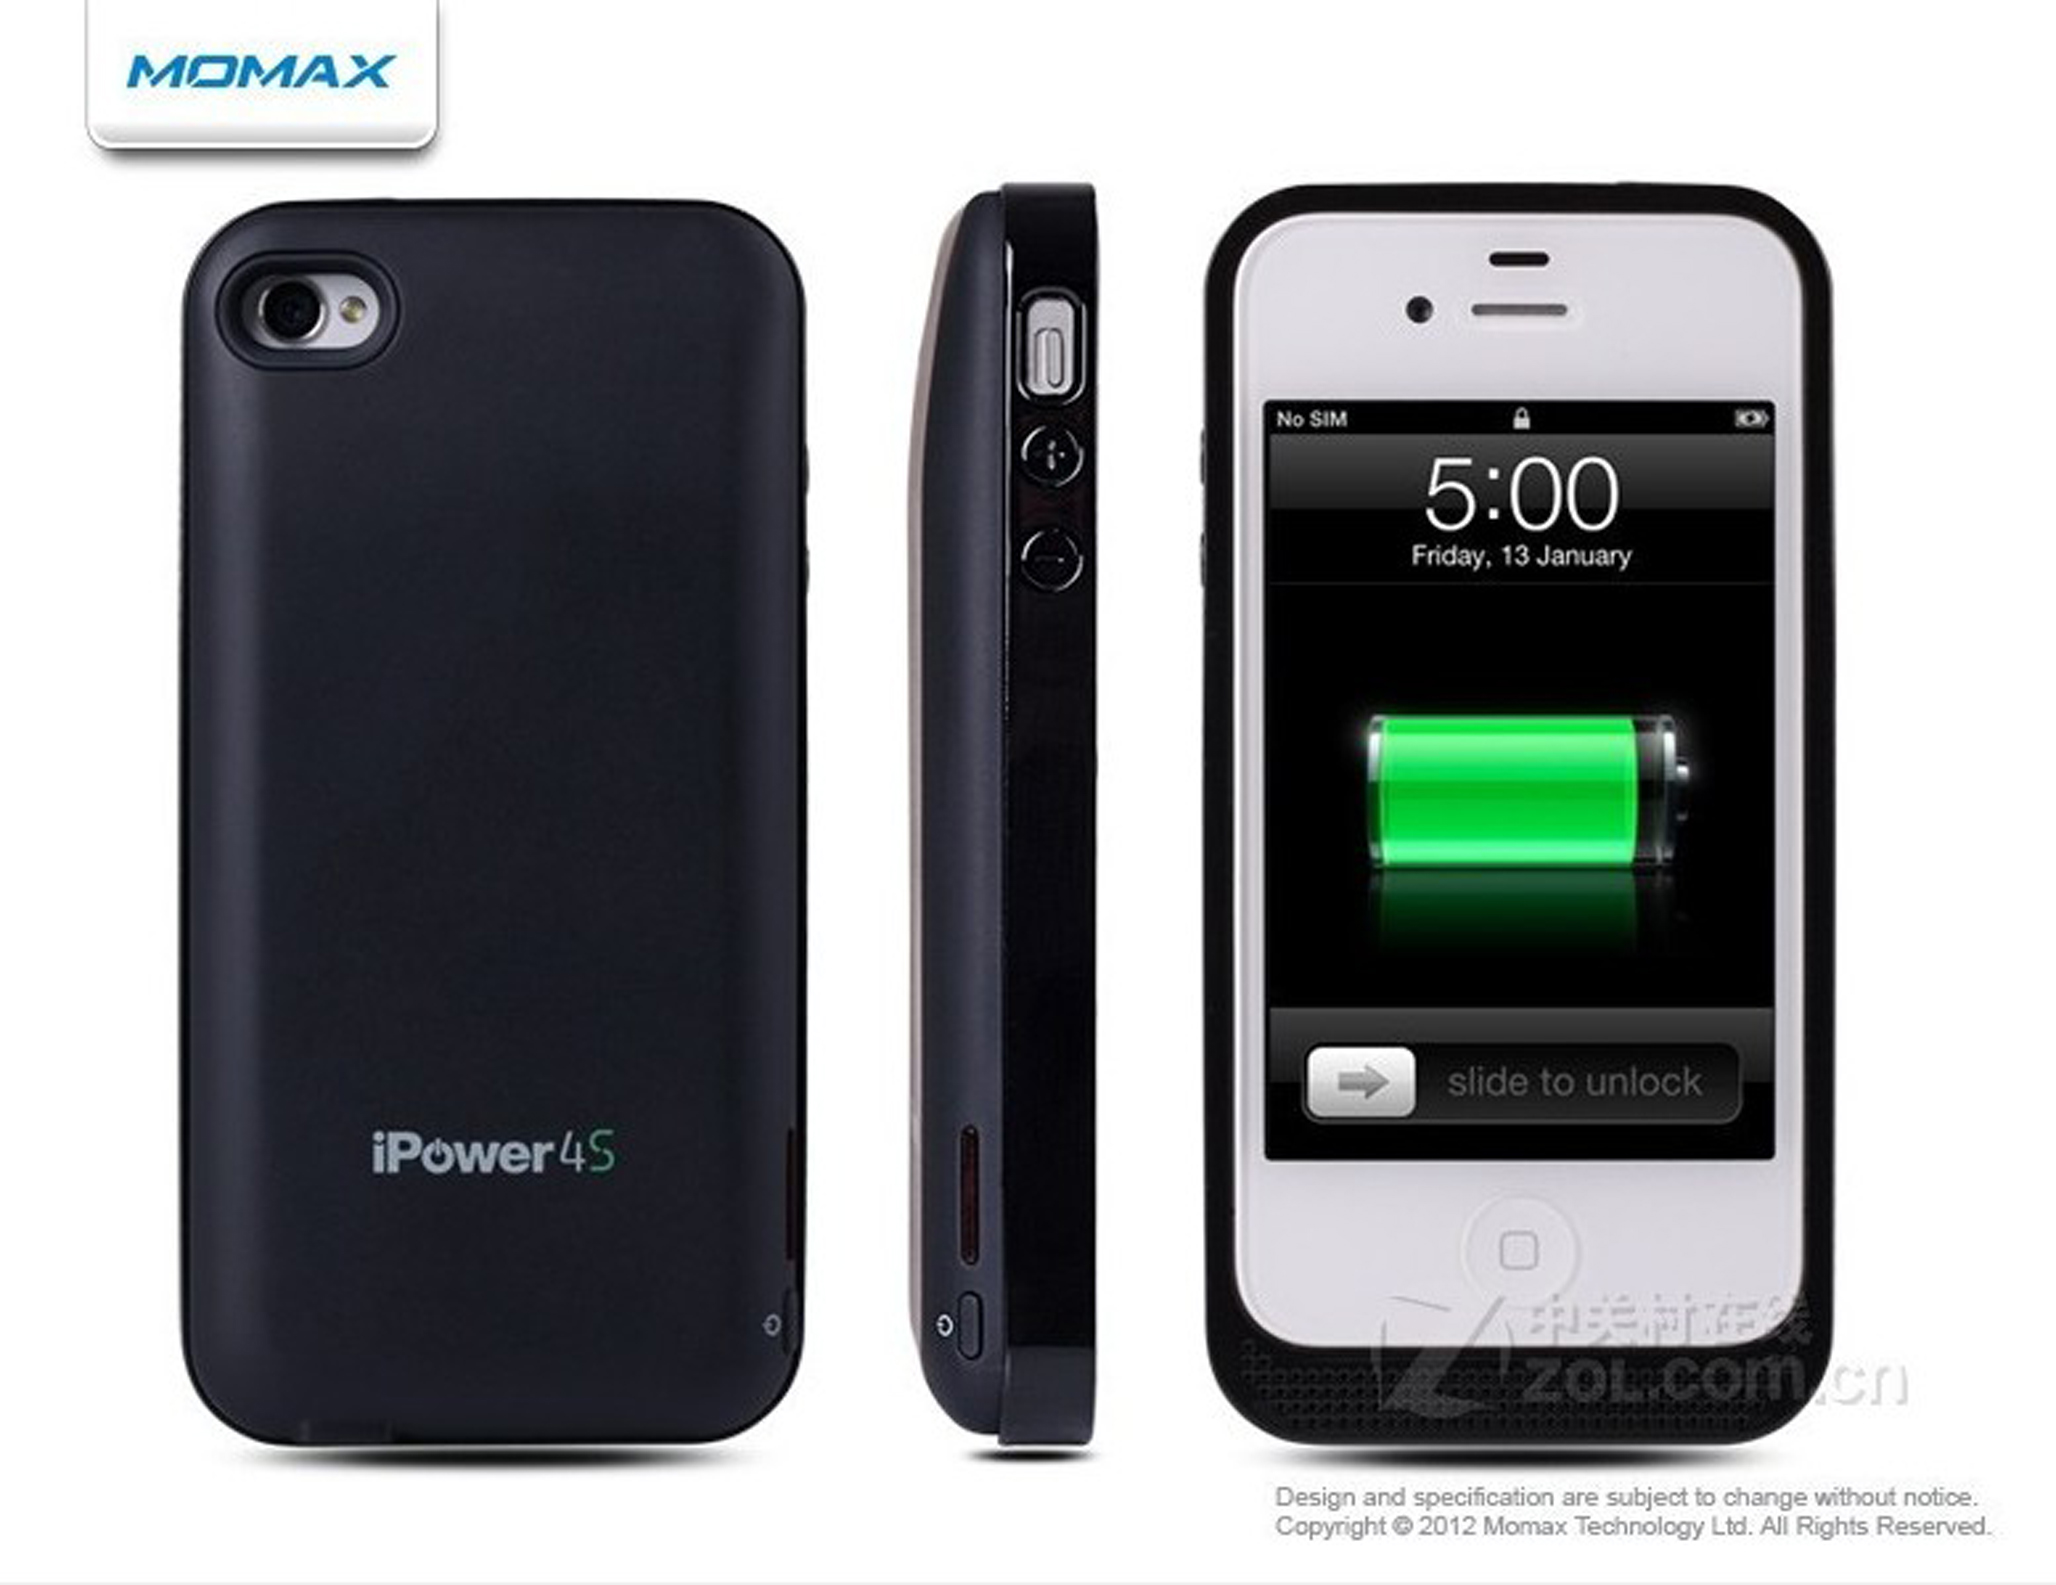 摩米士iPower 4S iPhone 4S/4彩配護殼背夾電池